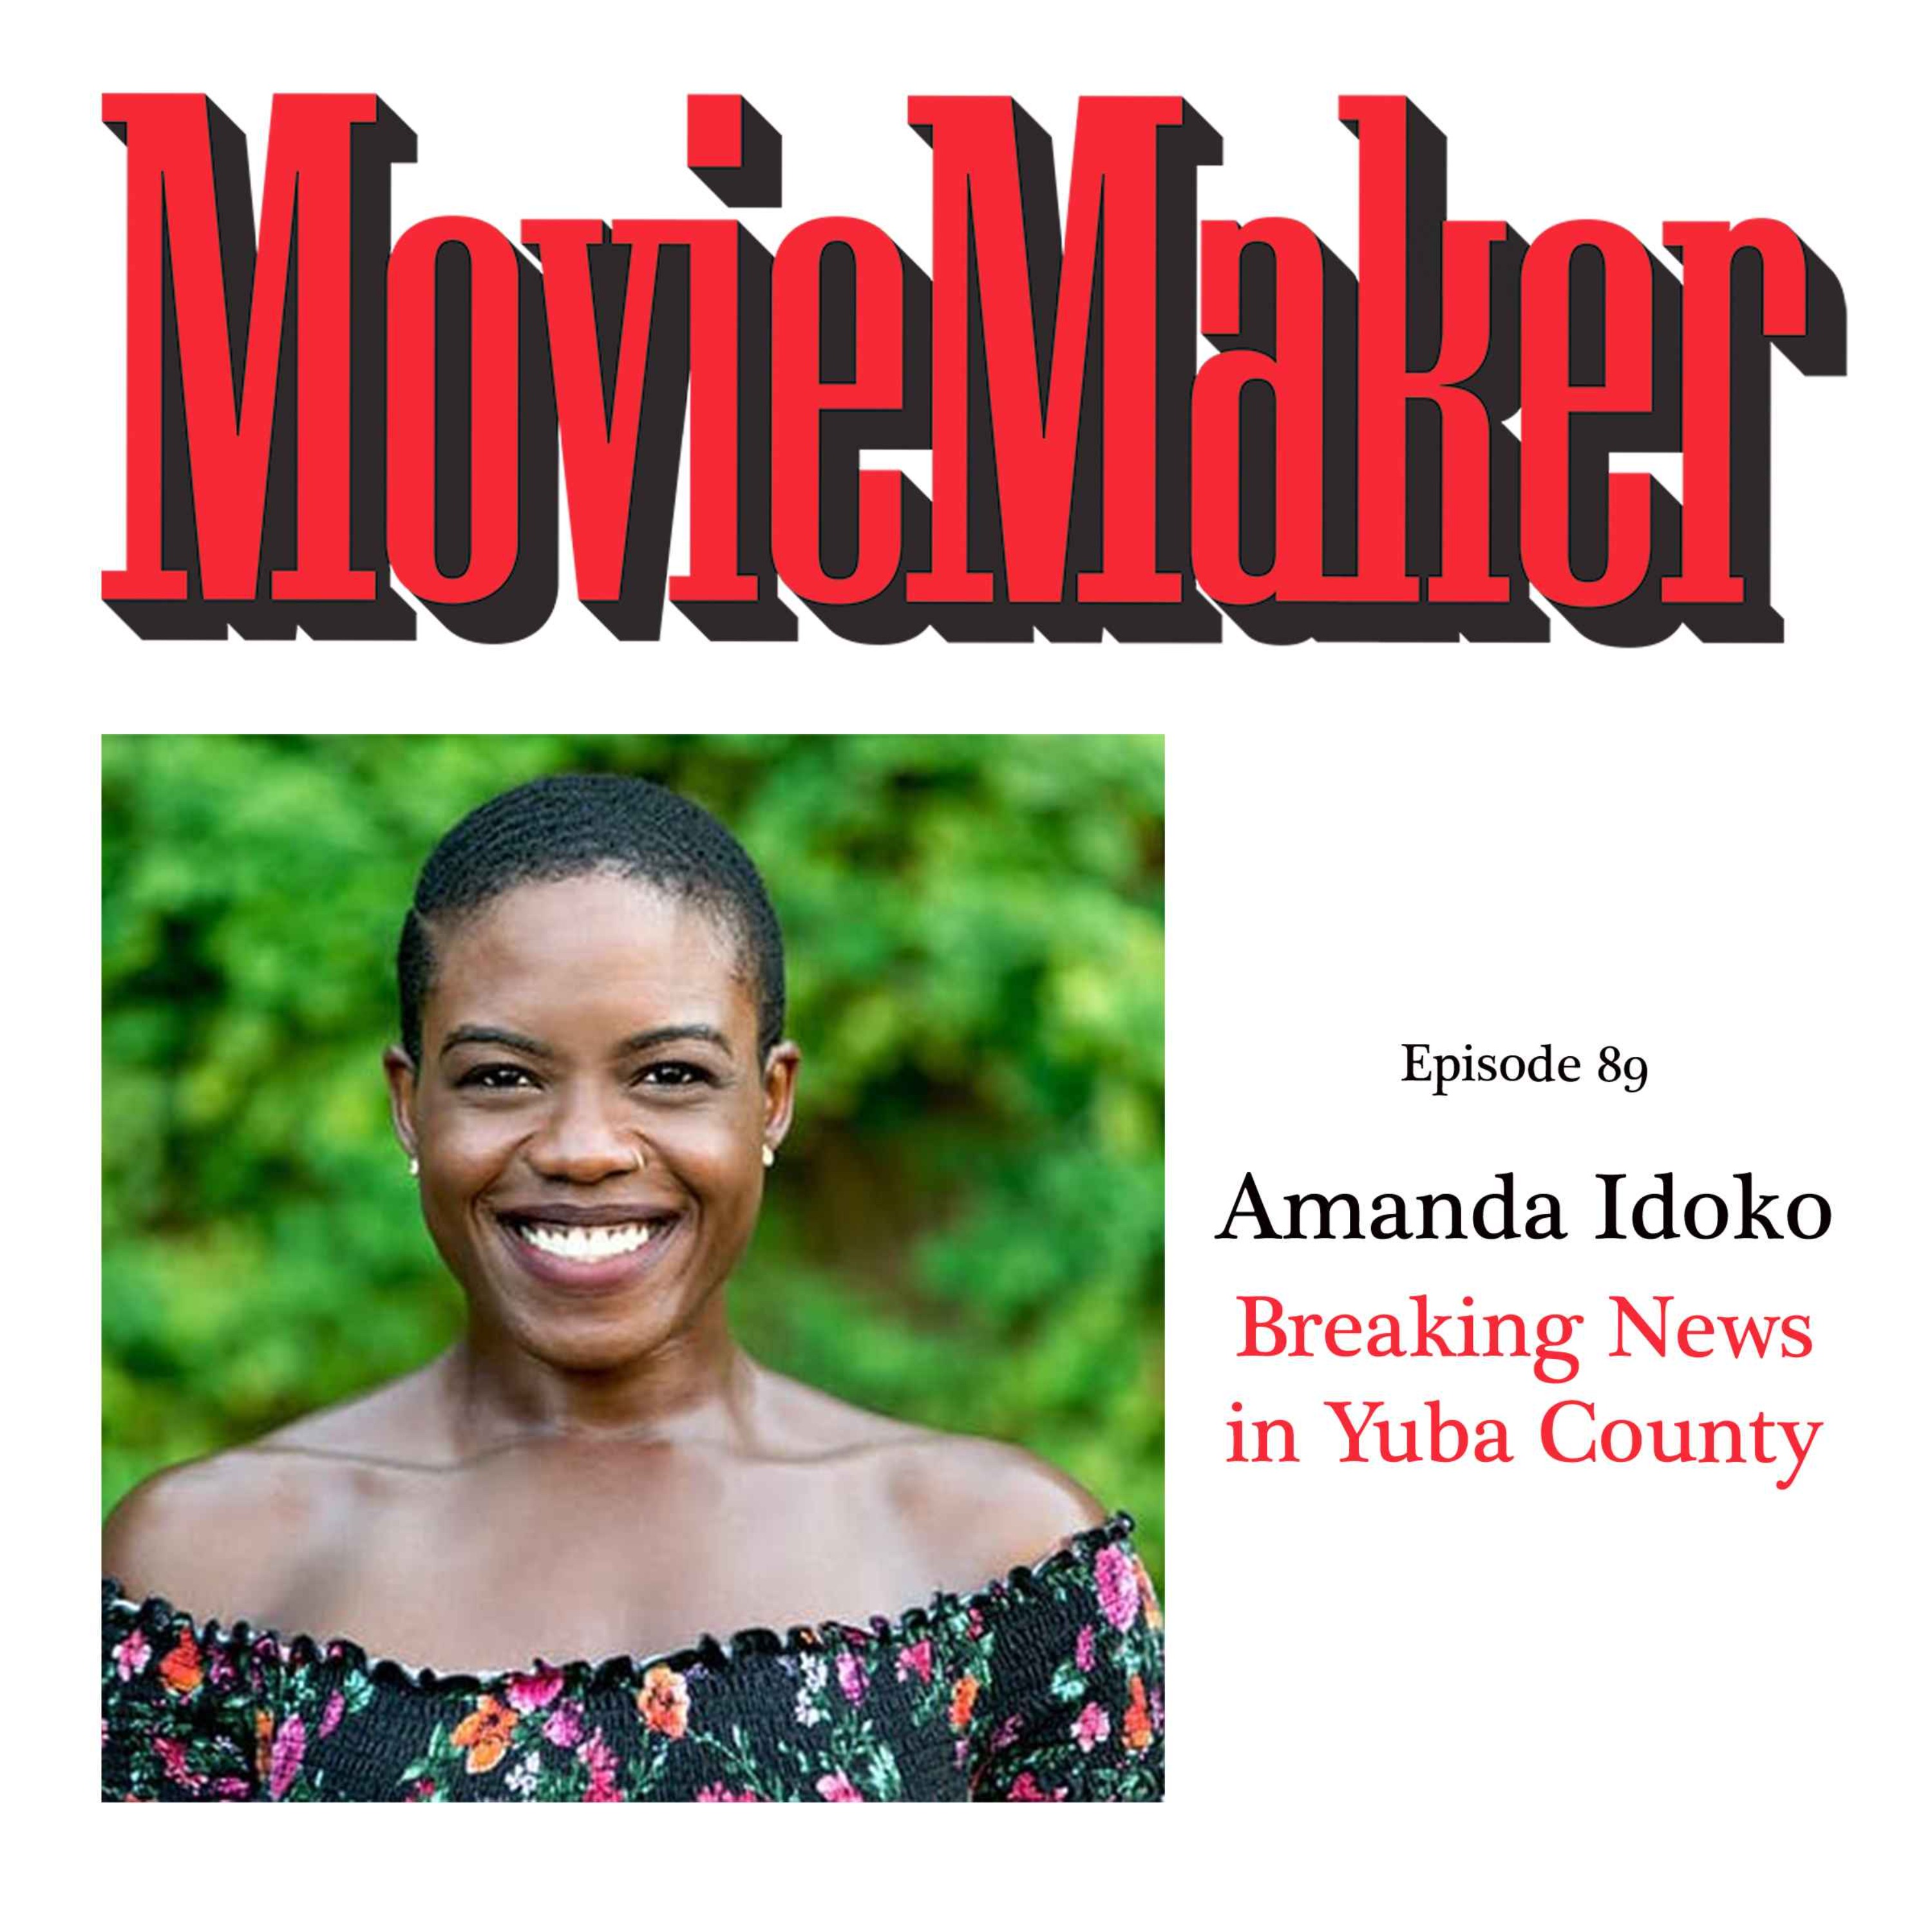 Amanda Idoko (Breaking News in Yuba County)